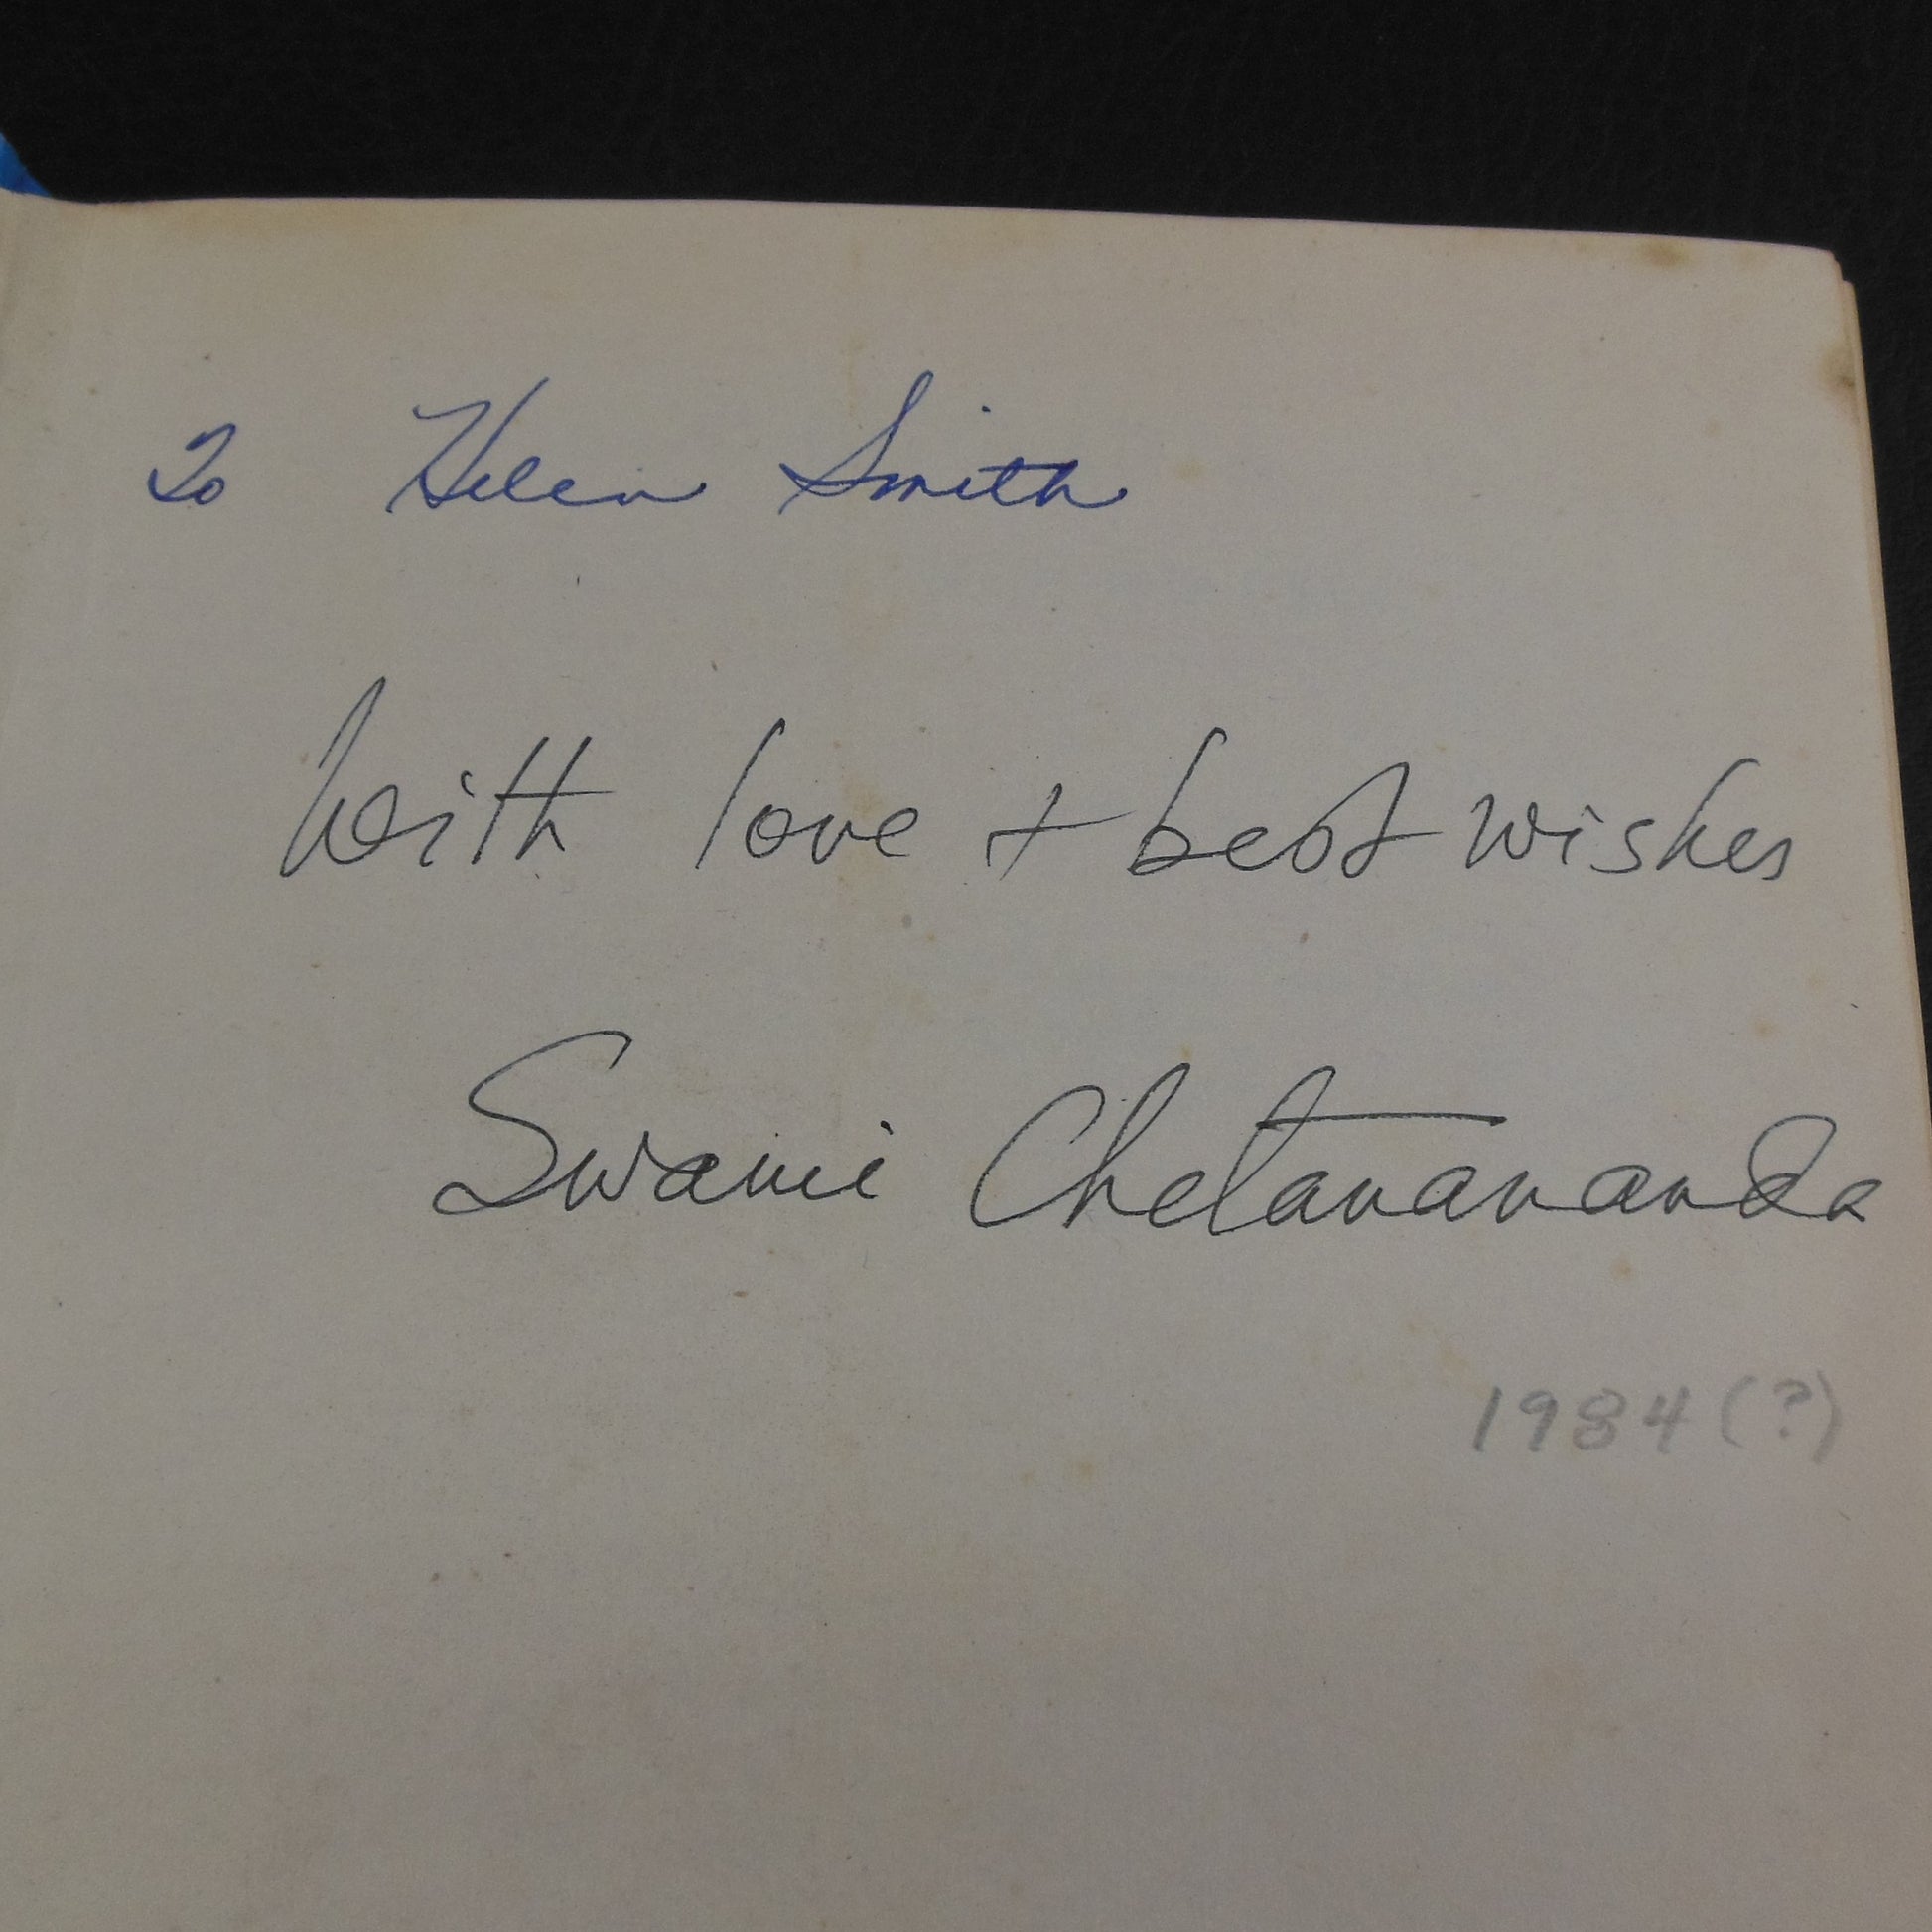 Swami Chetanananda Signed Book - Avadhuta Gita of Dattatreya vintage